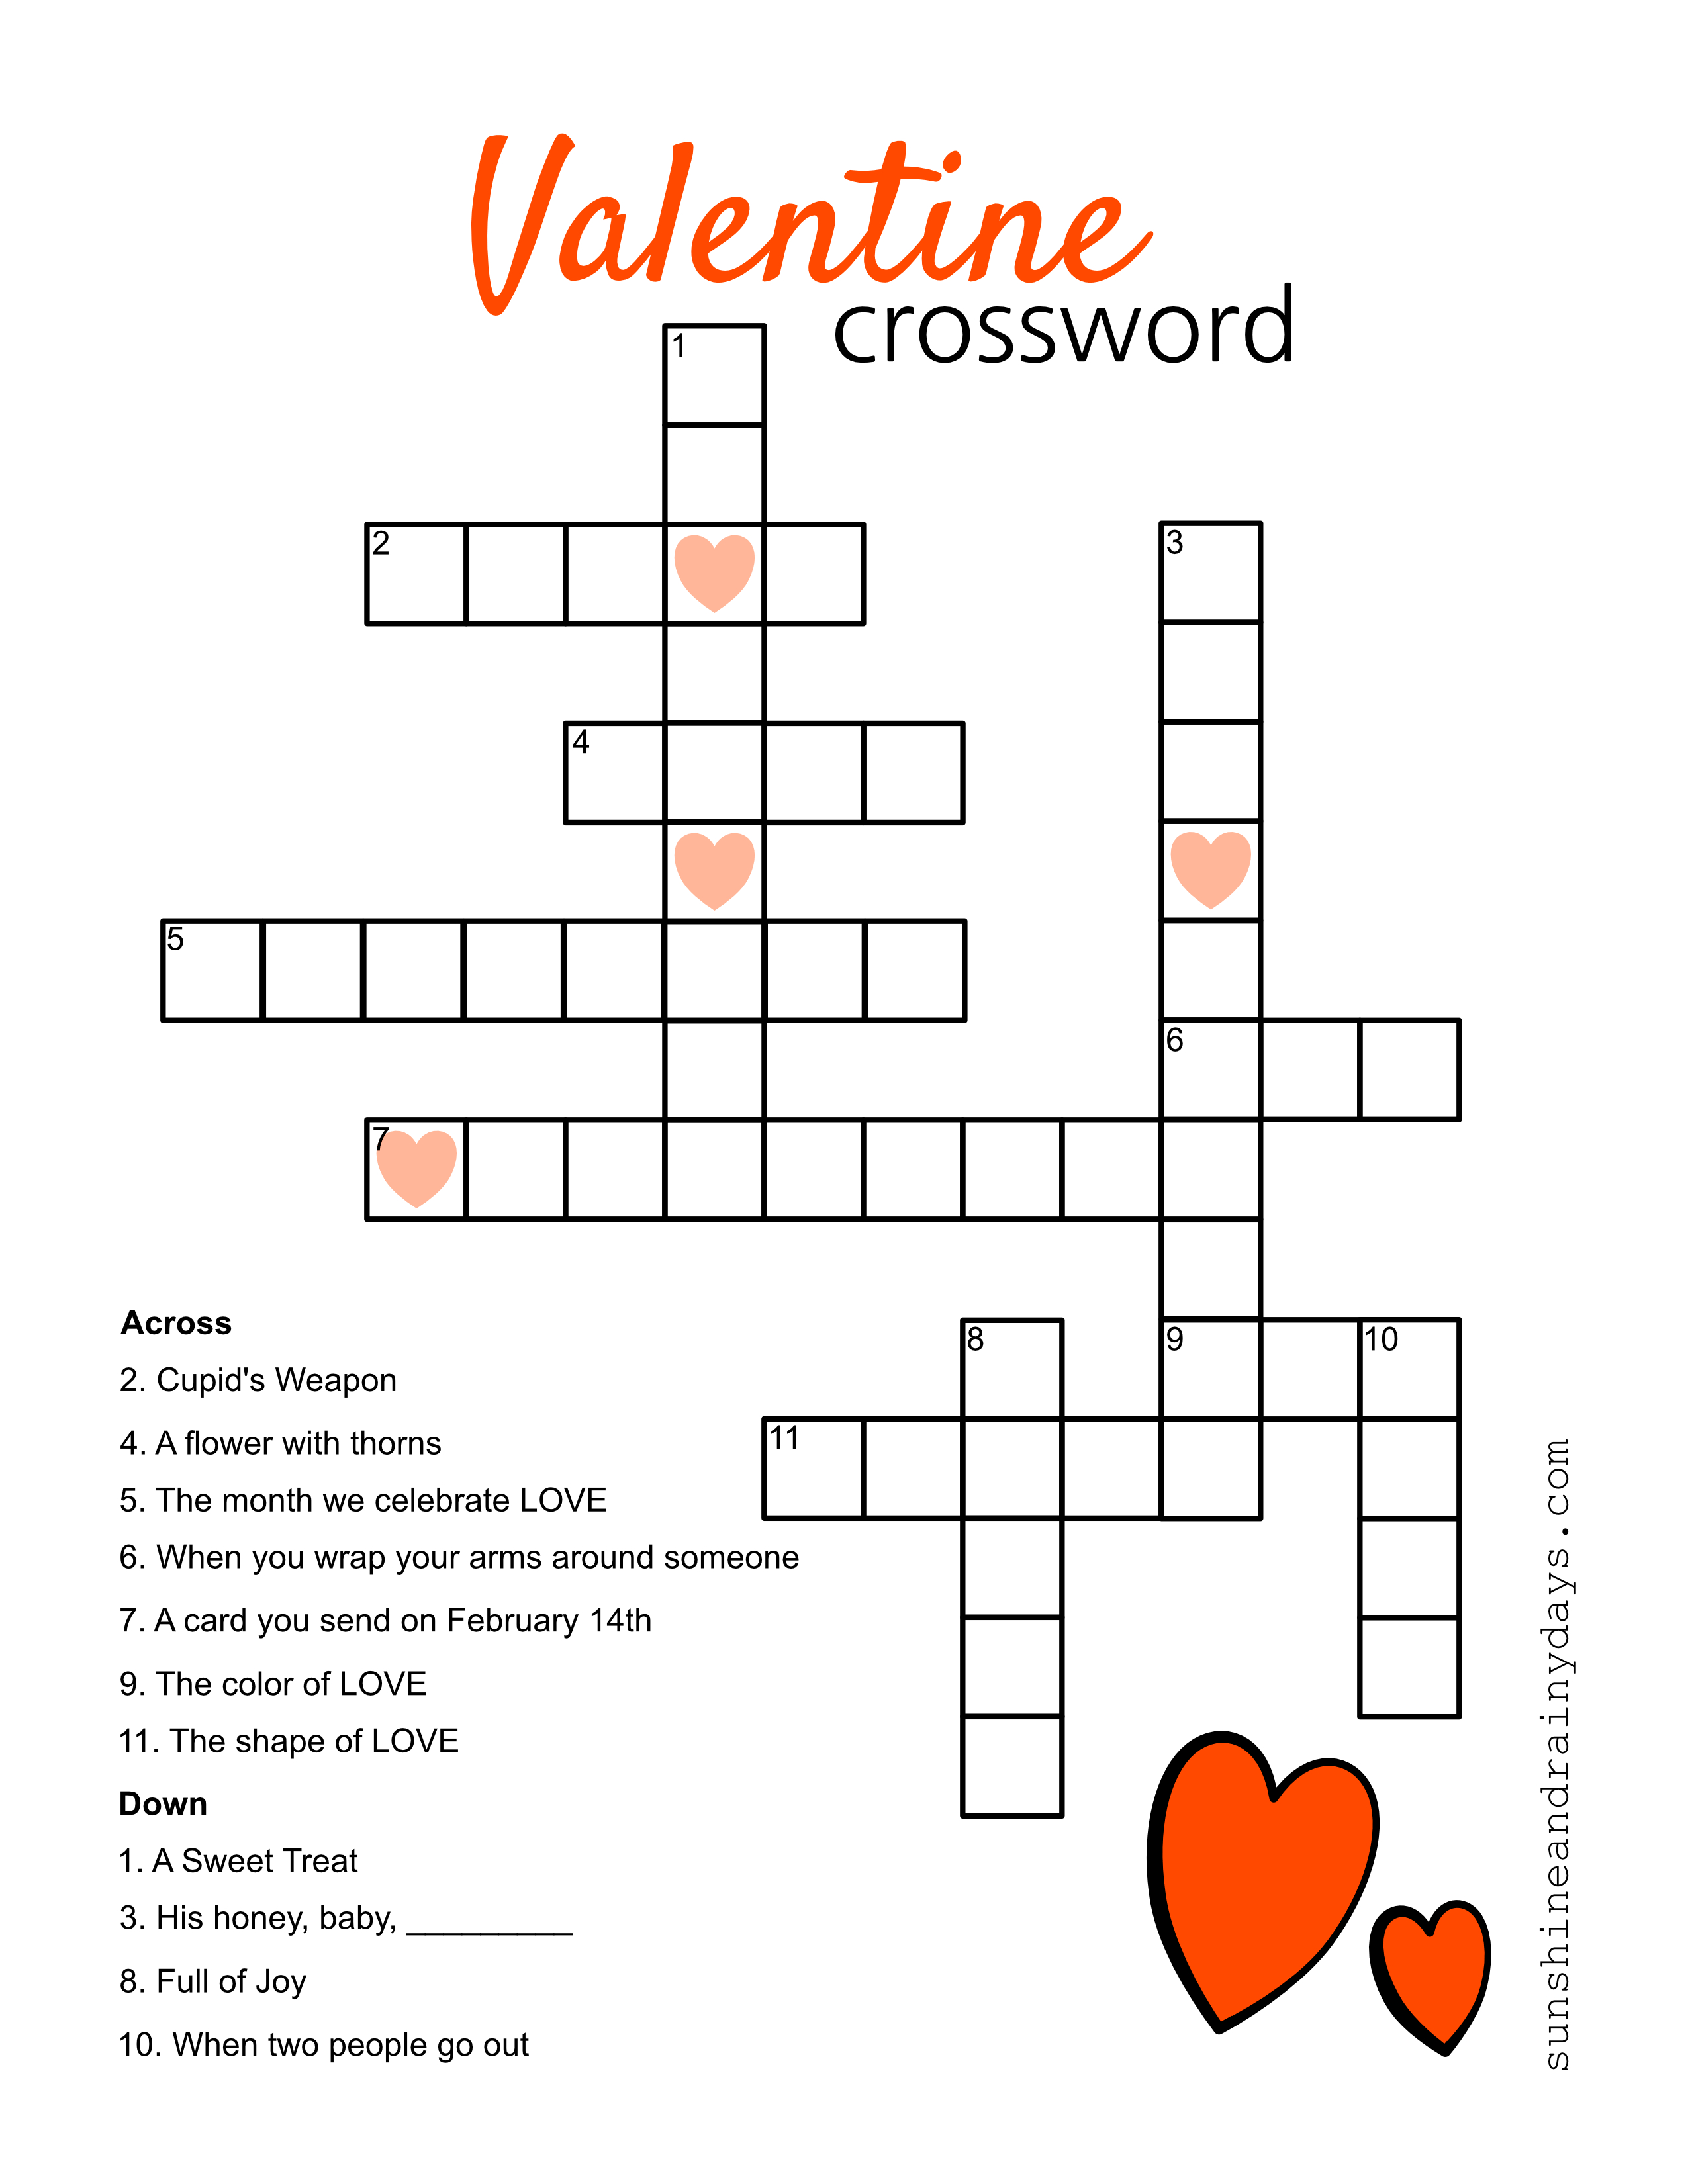 Valentine Crossword Puzzle - Sunshine And Rainy Days - Printable Valentine Crossword Puzzle